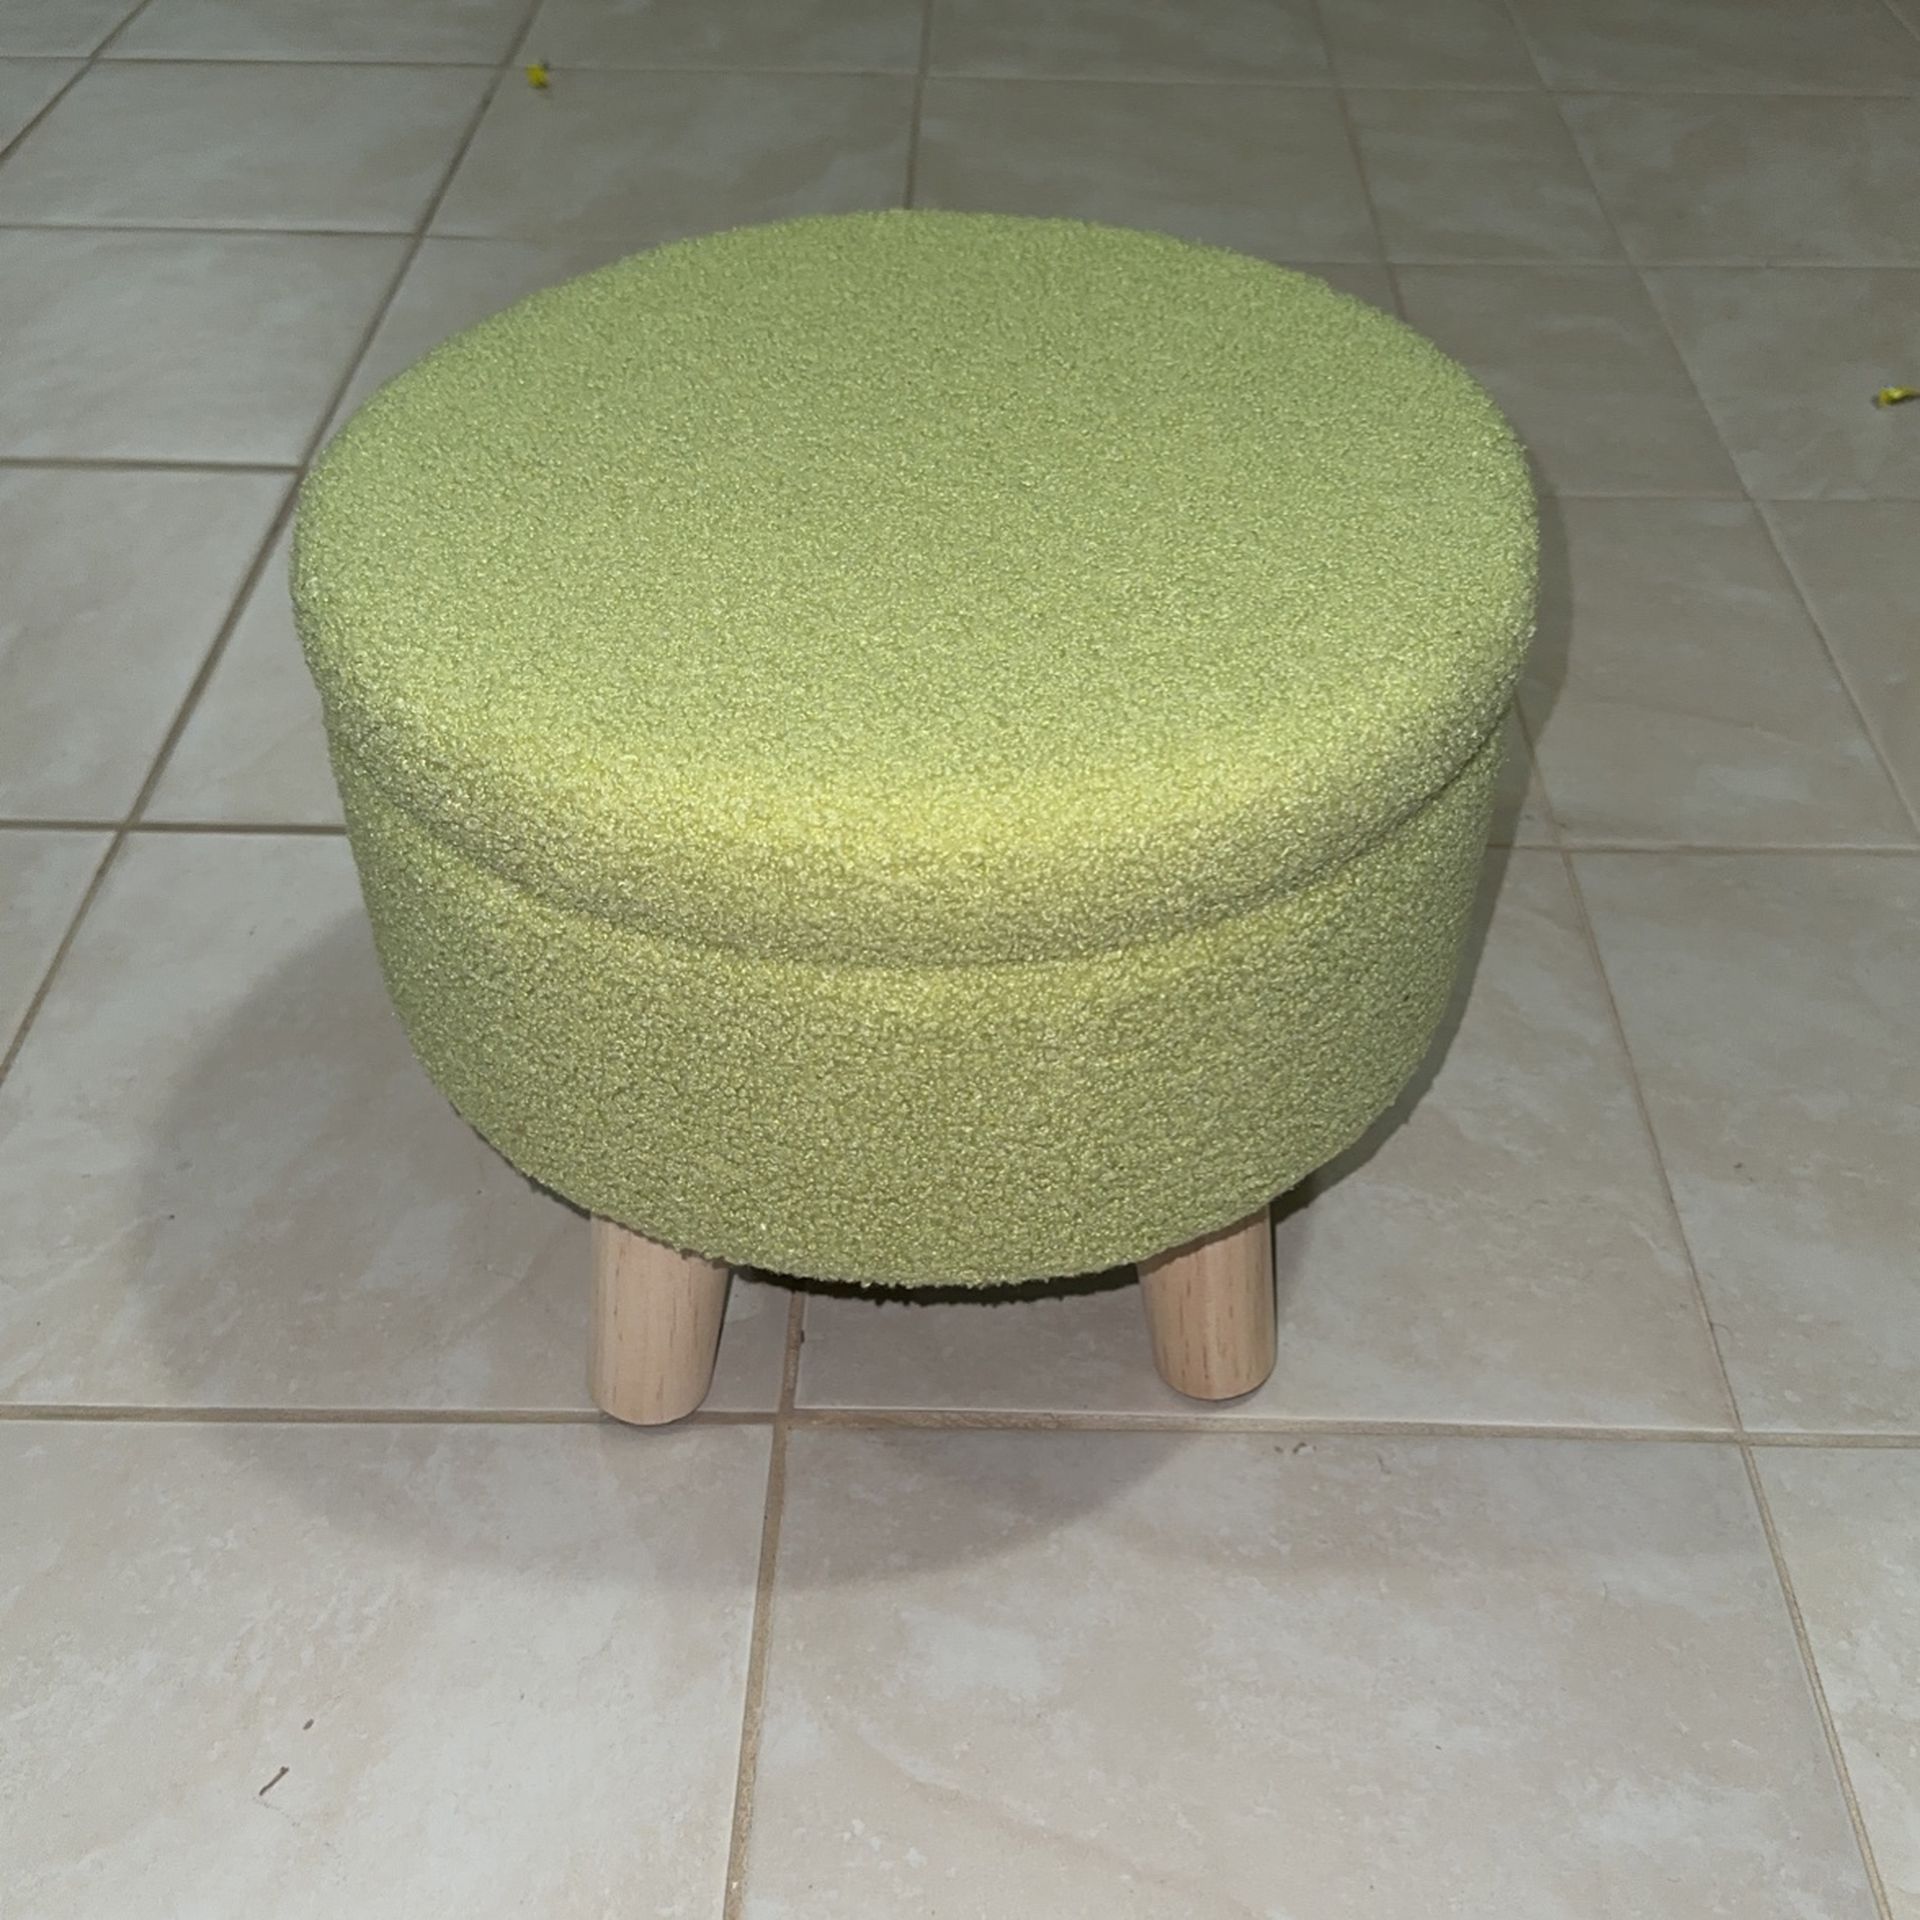  Wimarsbon Storage Ottoman, Modern Round Footrest with Soft Padded Seat